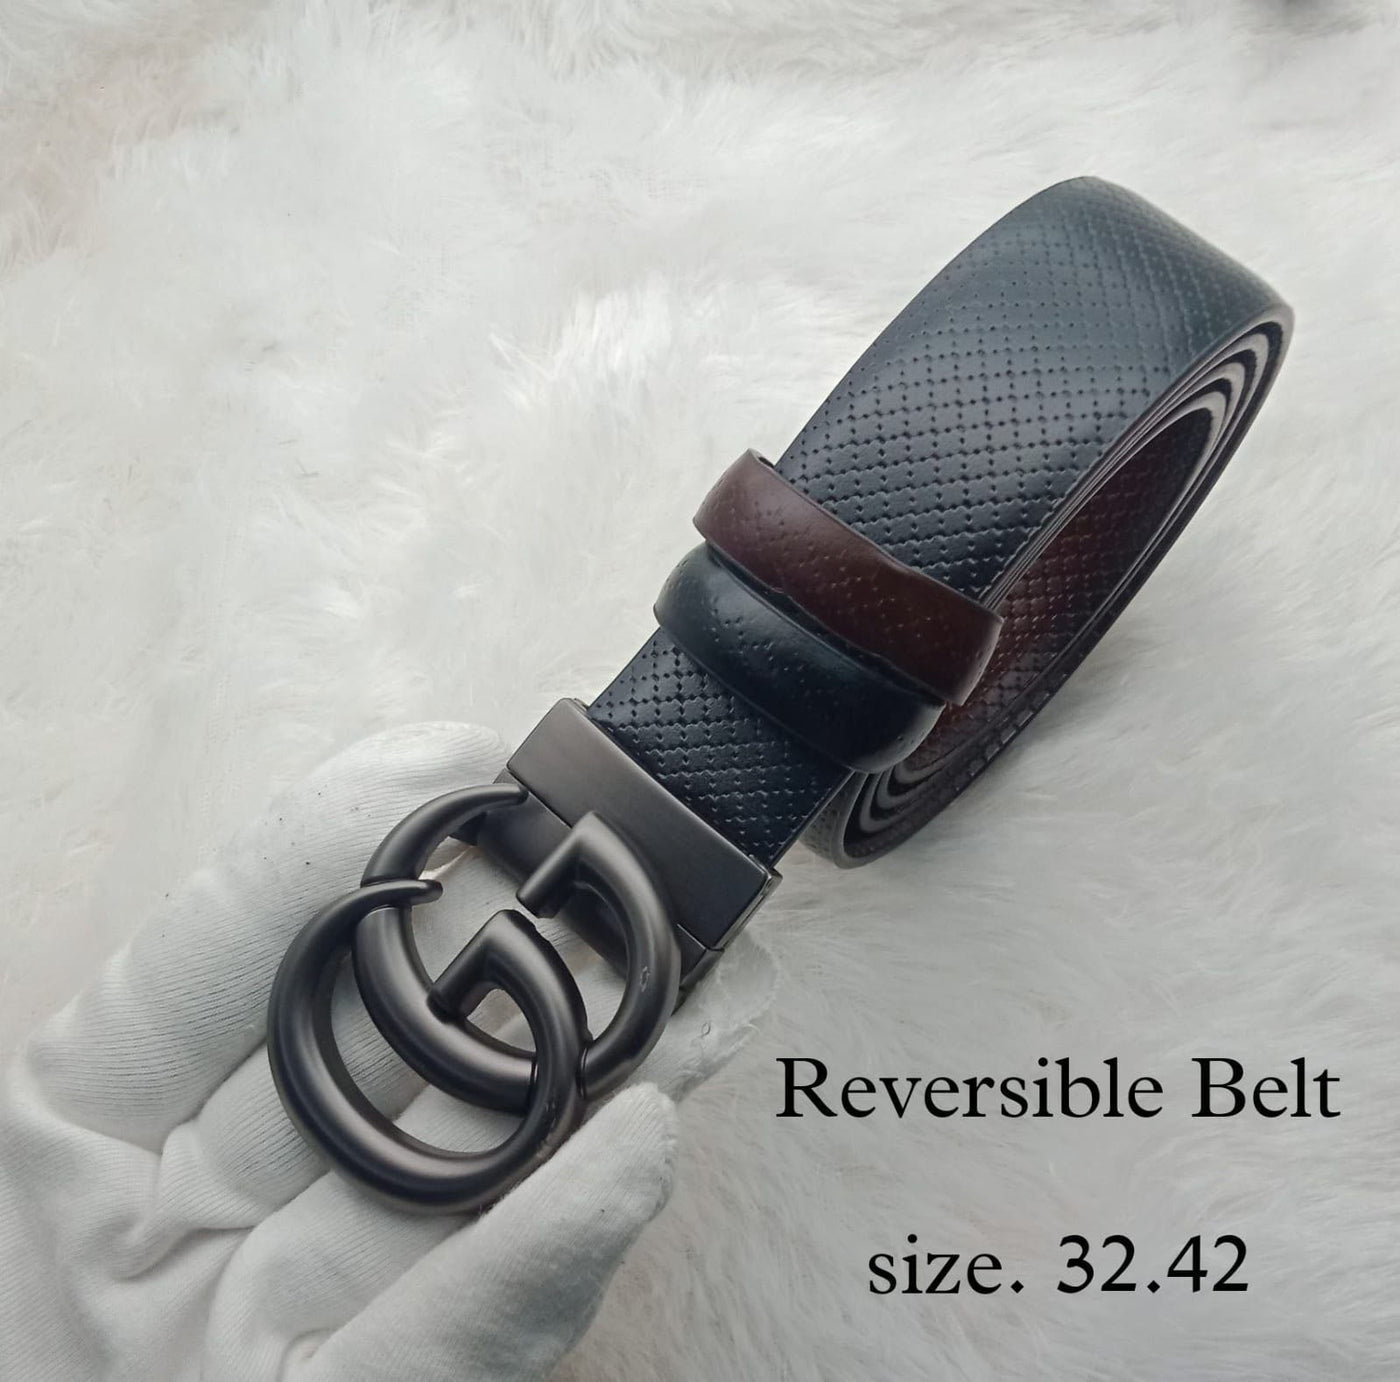 G Letter Designer Buckle Belt With Reversible Strap For Men's-Unique and Classy